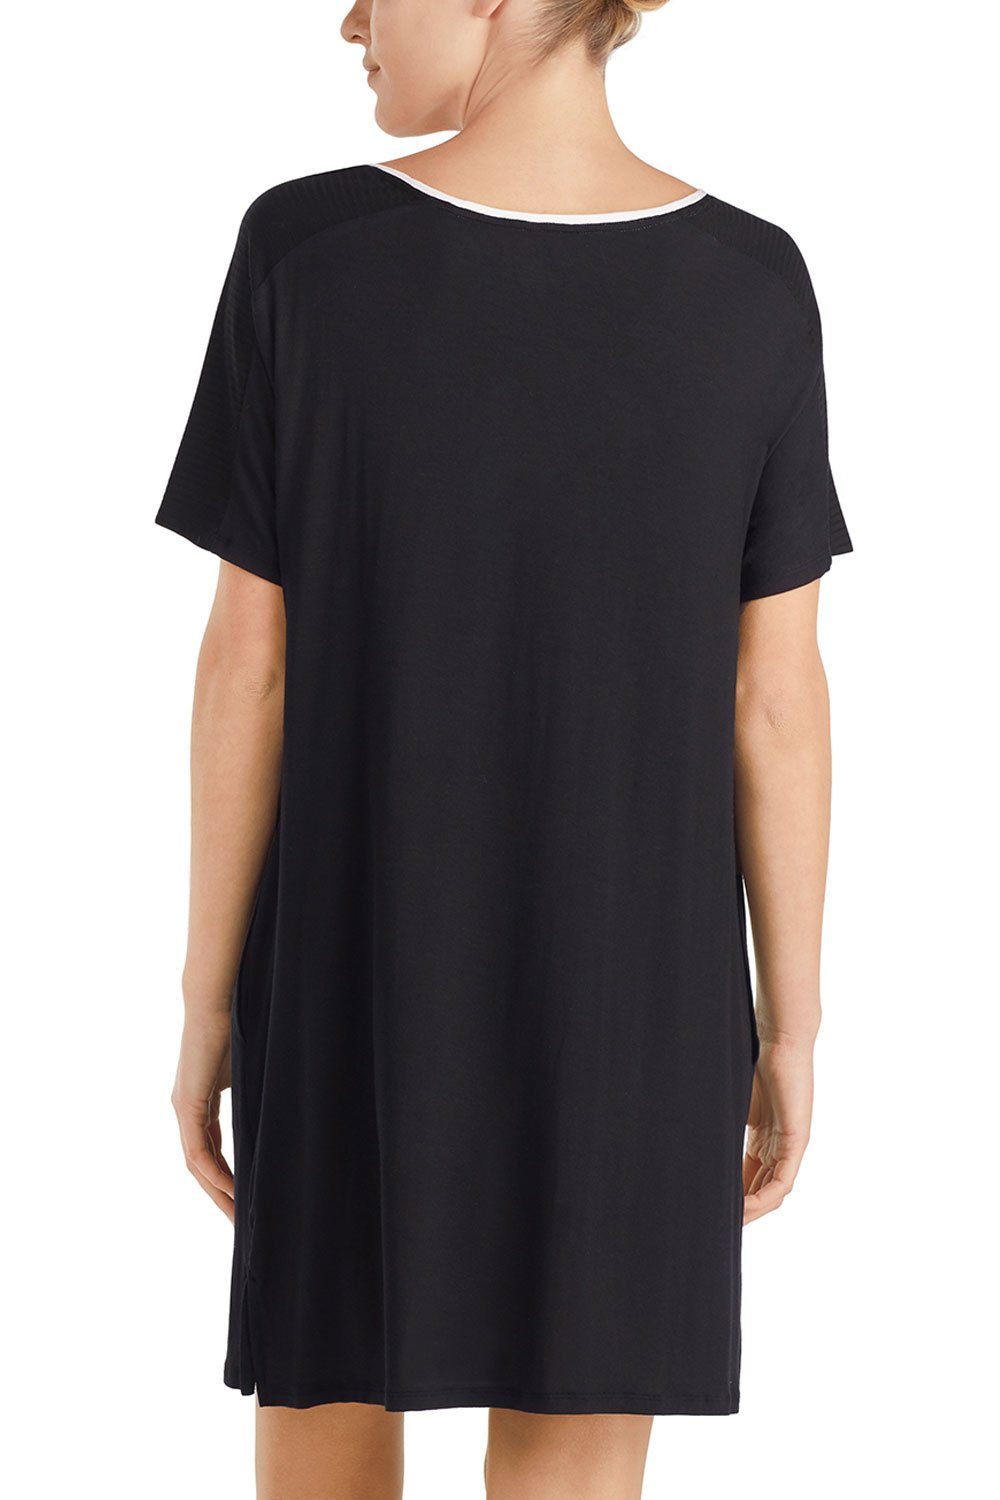 Nachthemd DKNY Essentials YI2319330 black Sleepshirt